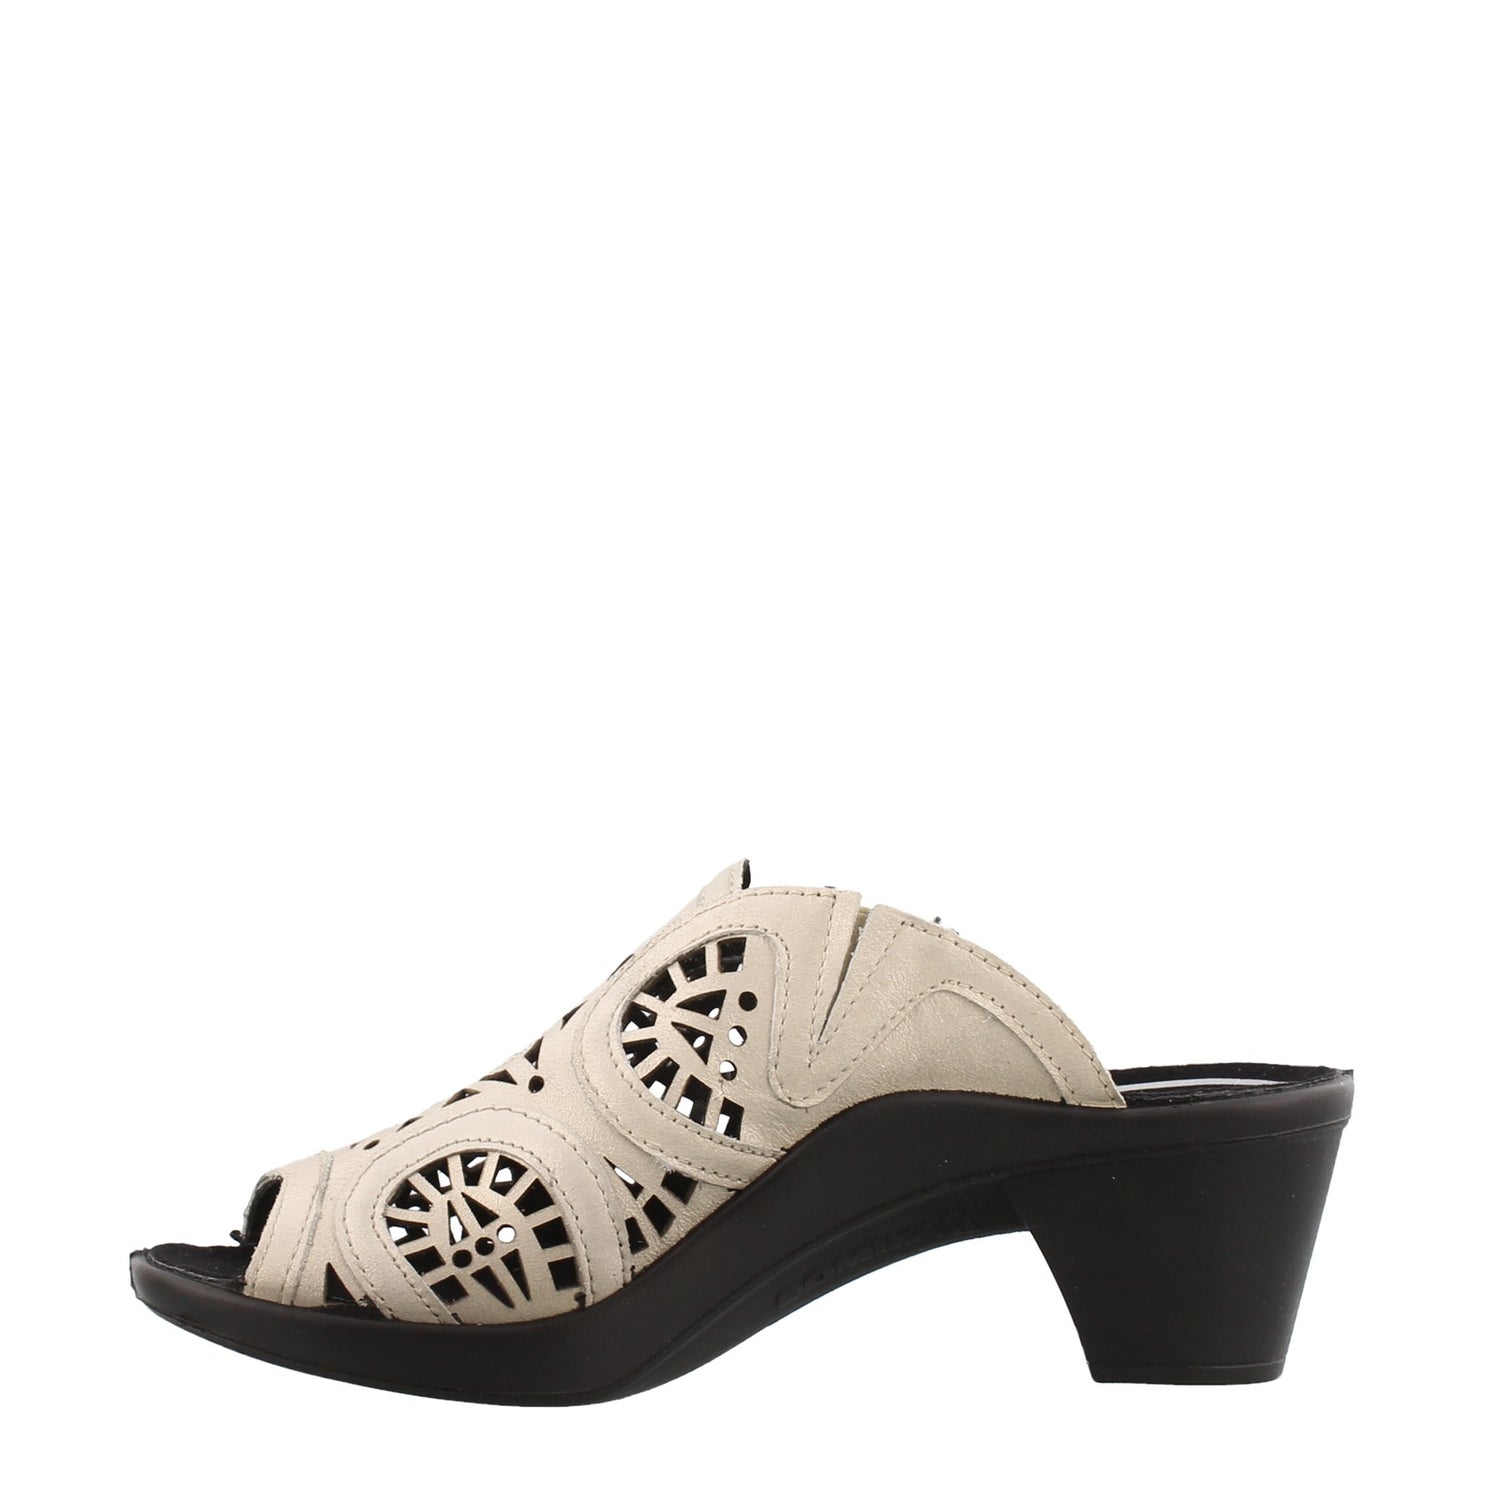 Peltz Shoes  Women's Romika Mokassetta 265 Sandal CREAM 27065-85231